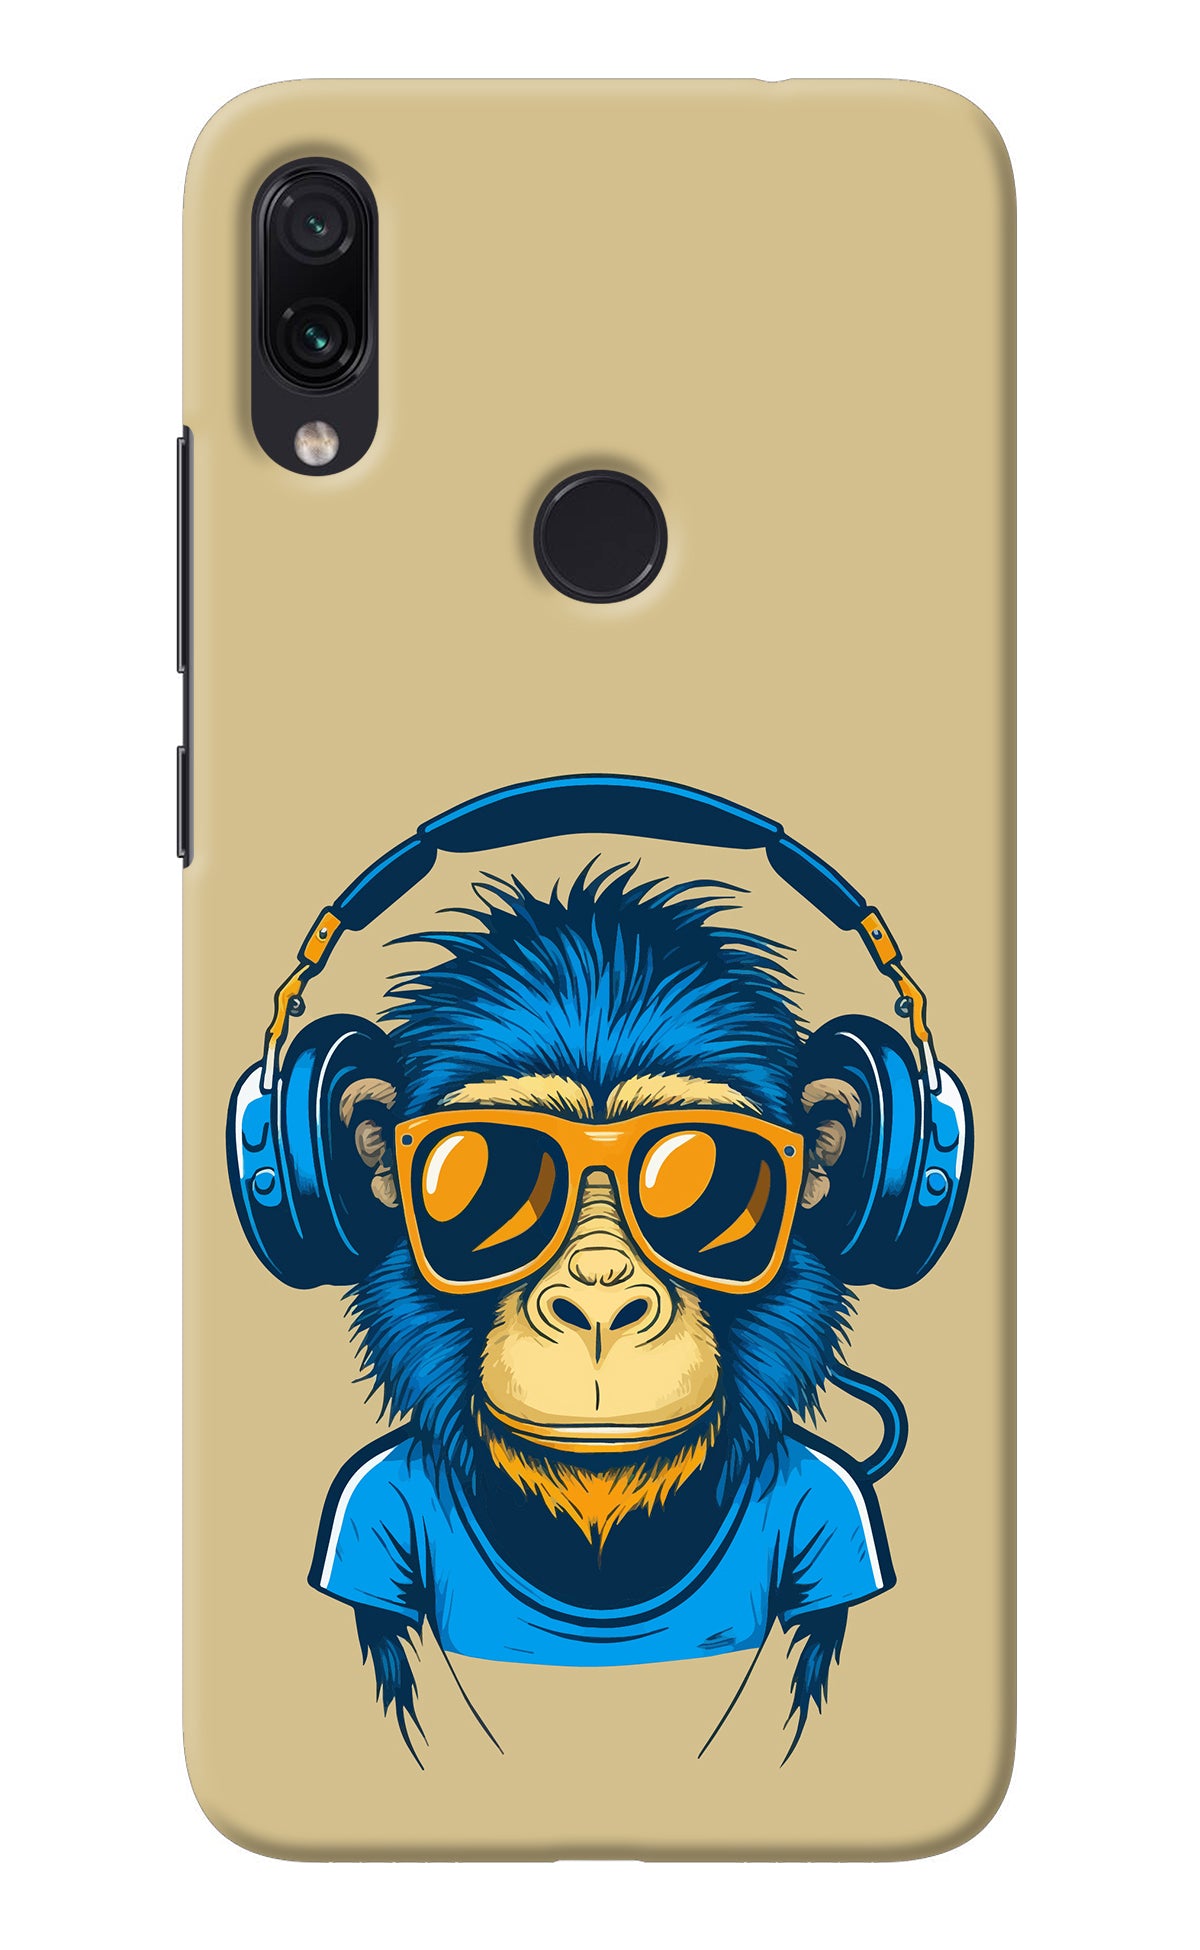 Monkey Headphone Redmi Note 7/7S/7 Pro Back Cover